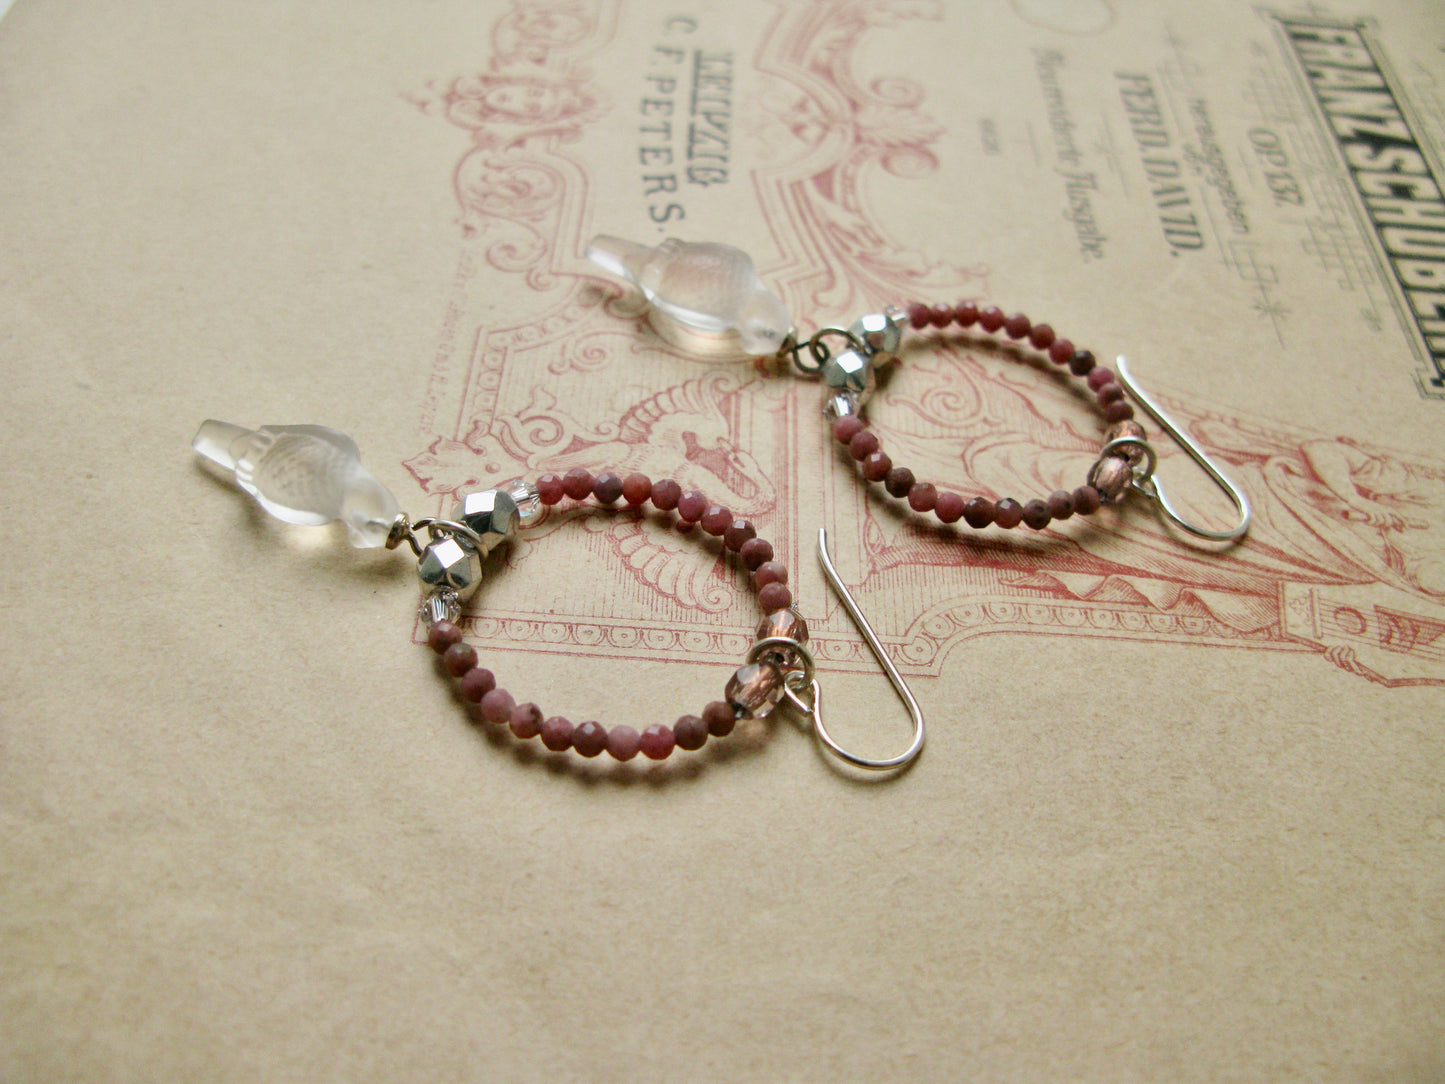 Liberté earrings with rhodonite